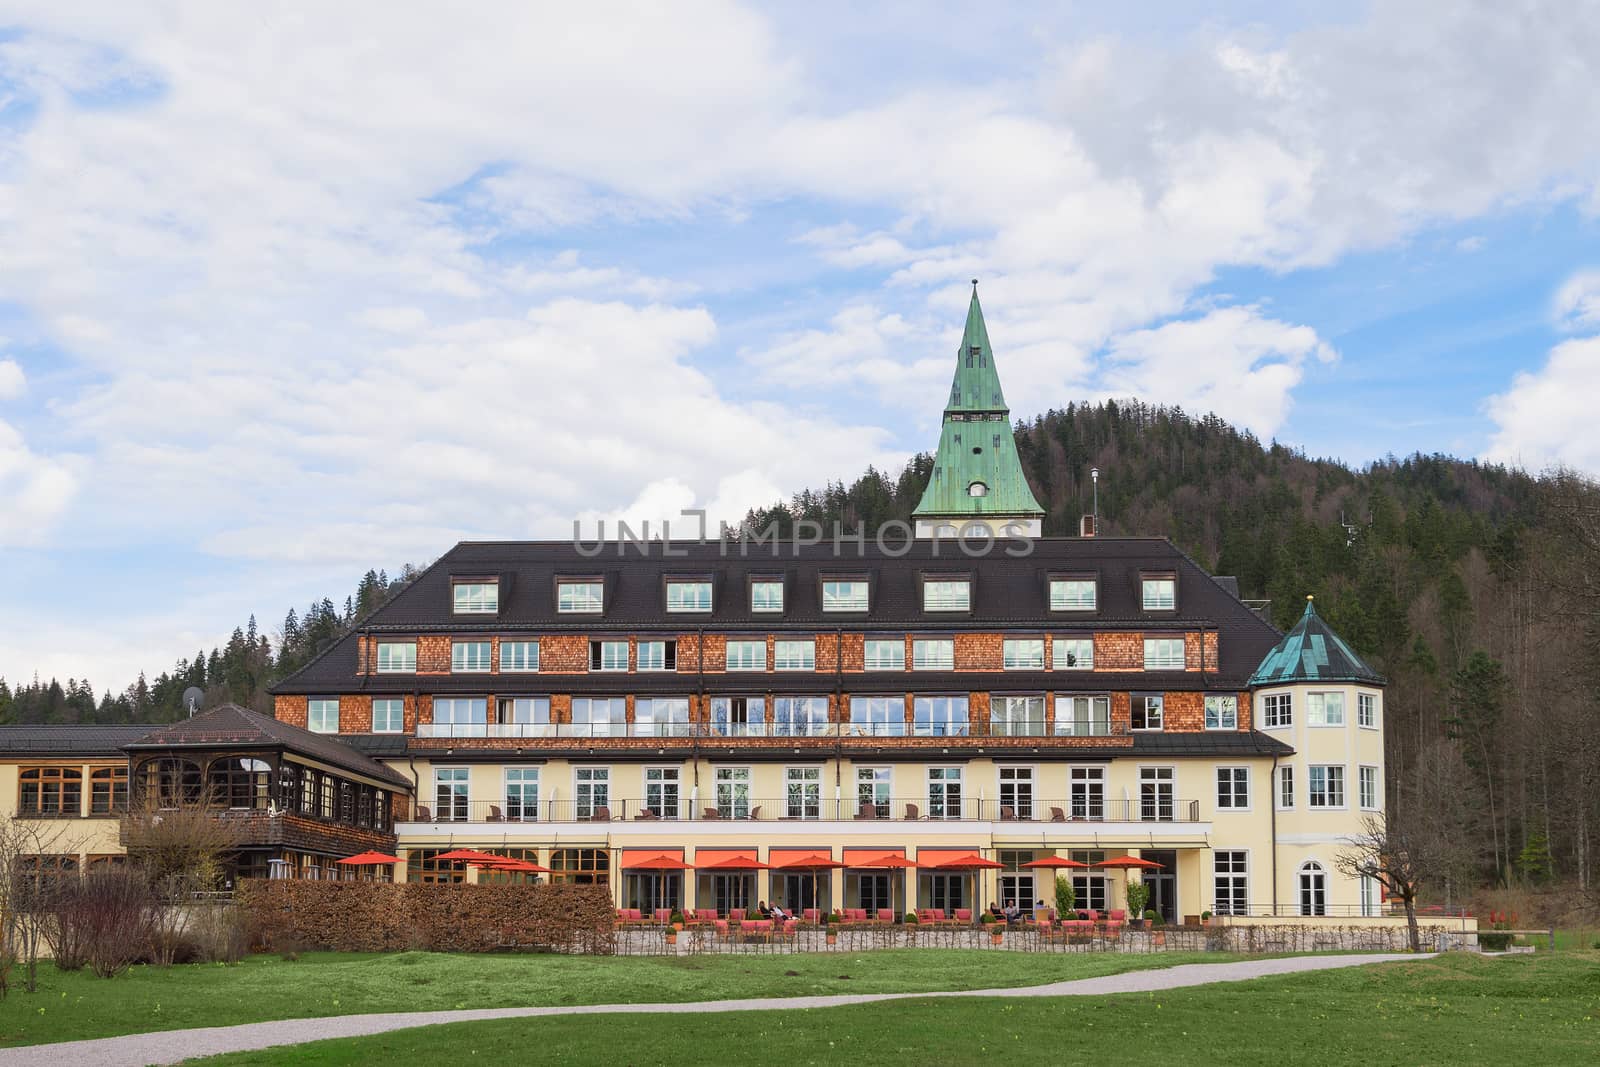 Backyard of hotel Elmau Schloss summit G8 2015 by servickuz